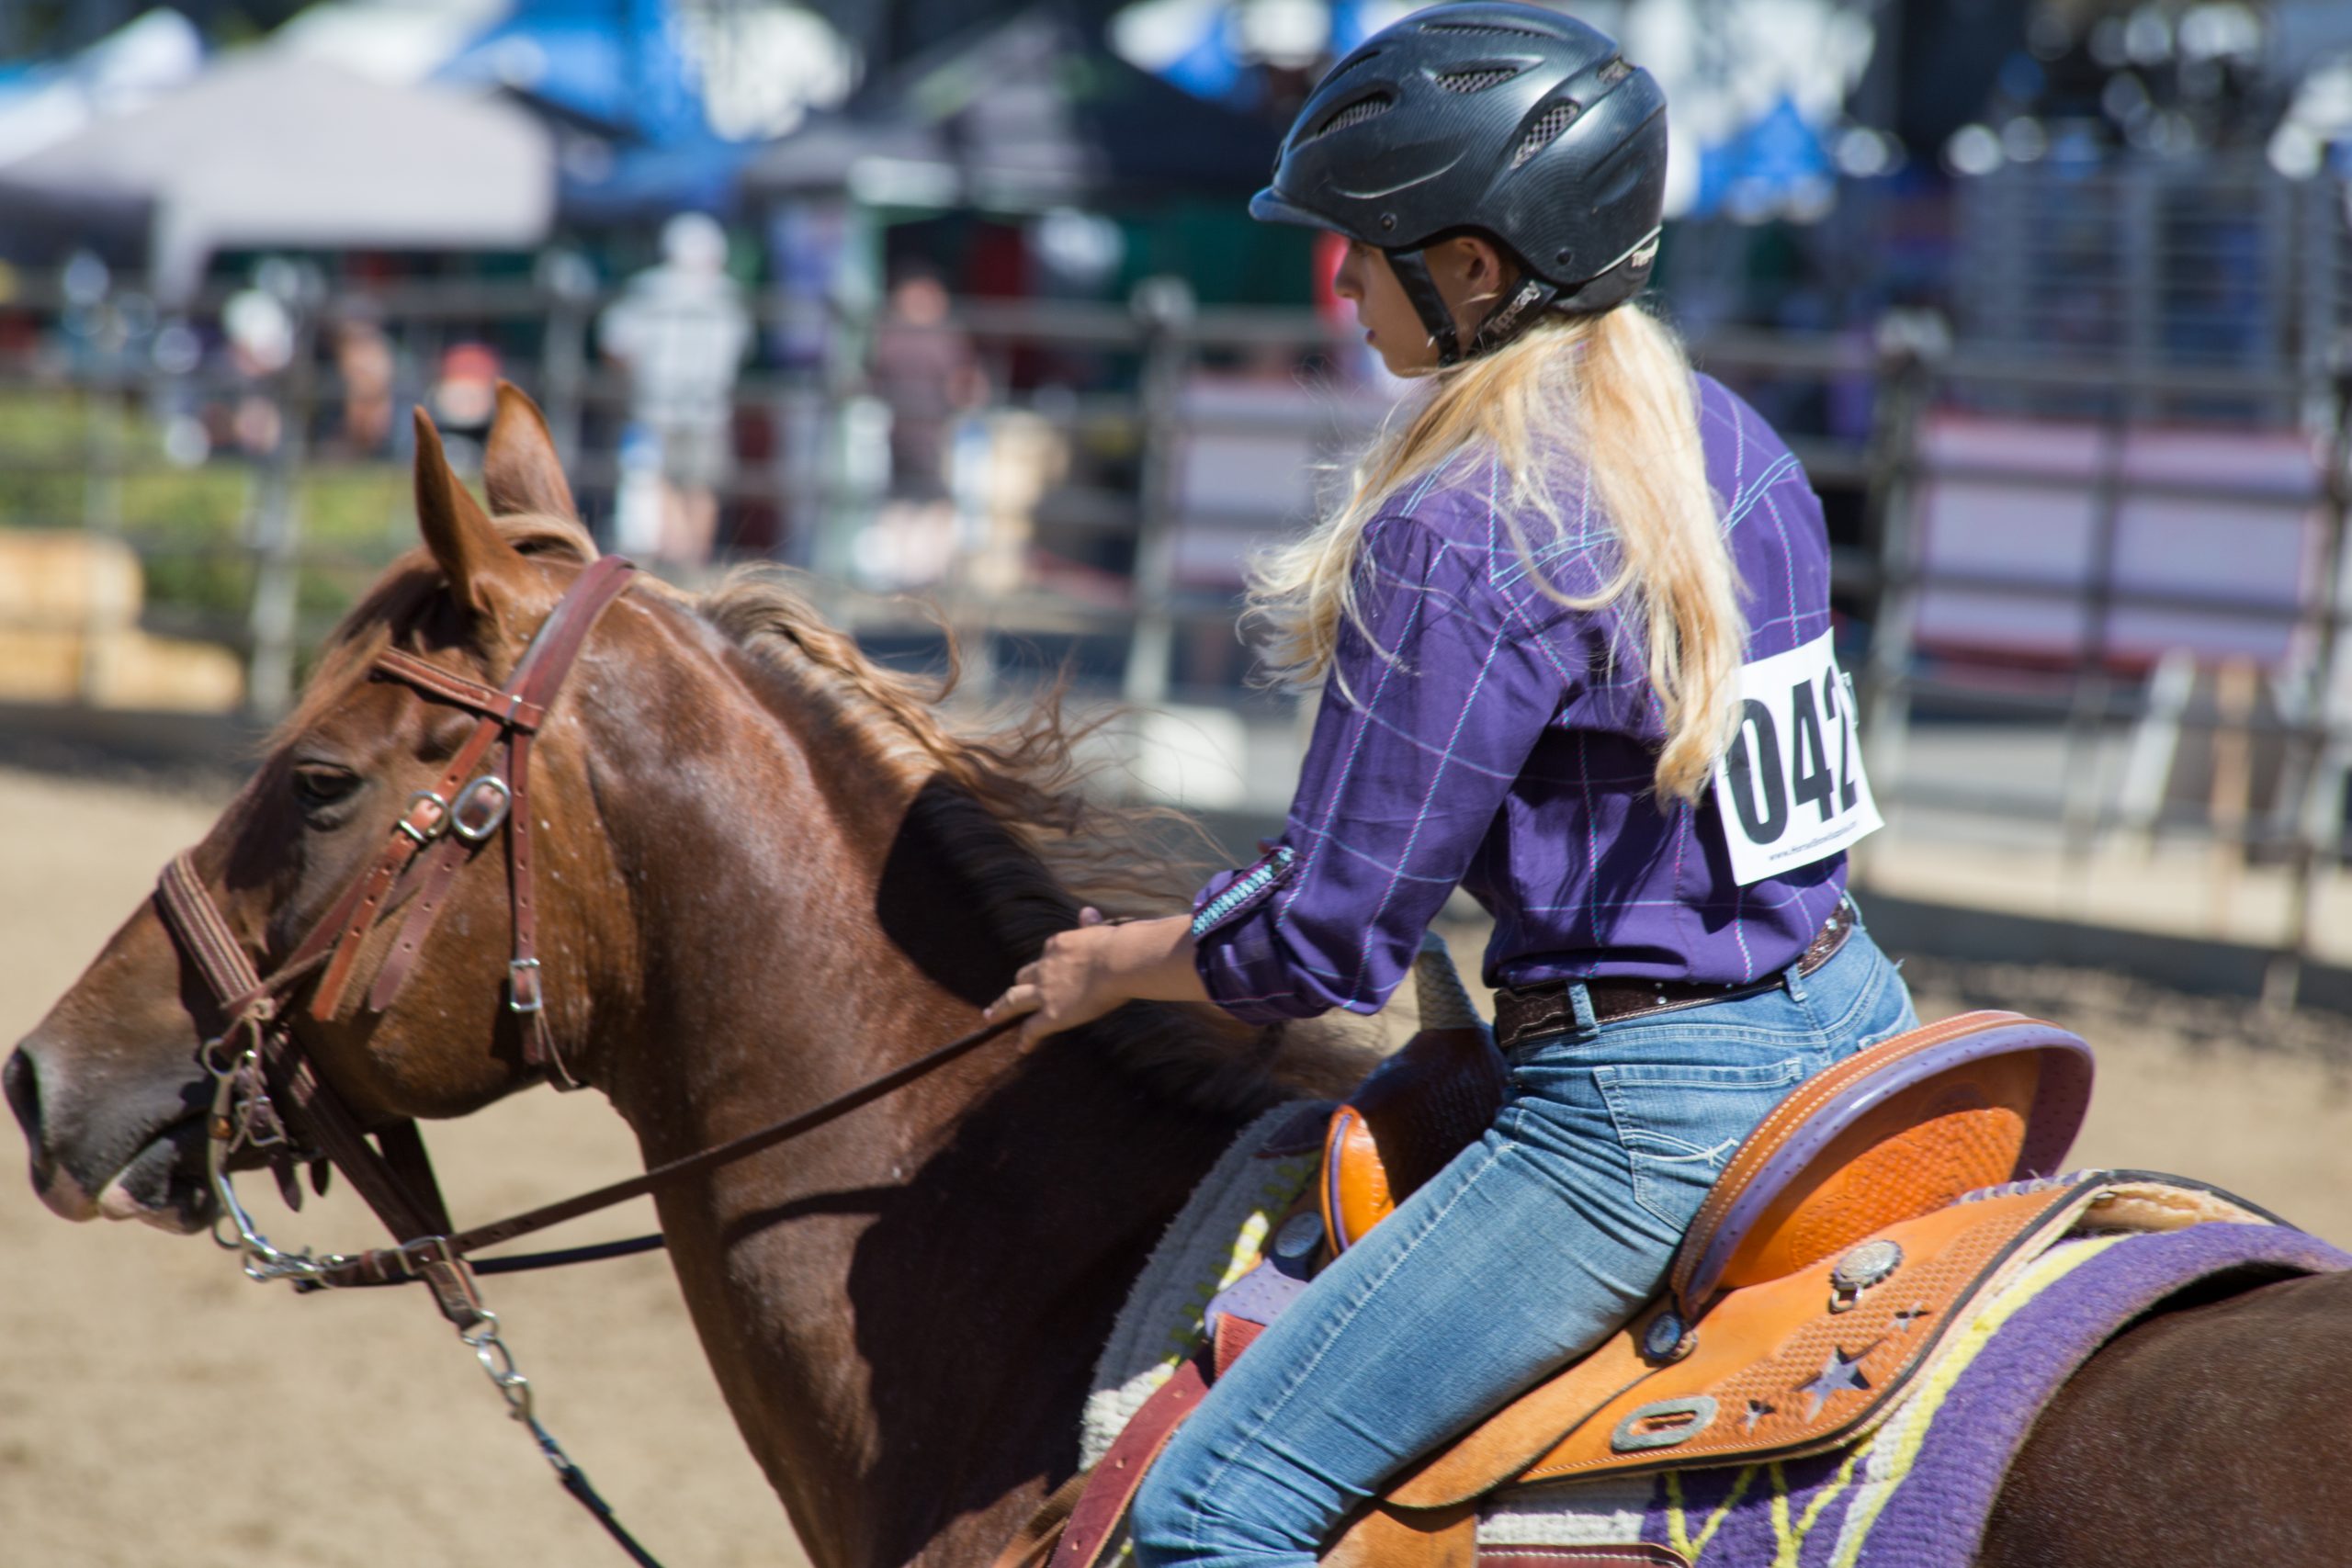 Horse exhibitor riding in the California State Fair horse arena